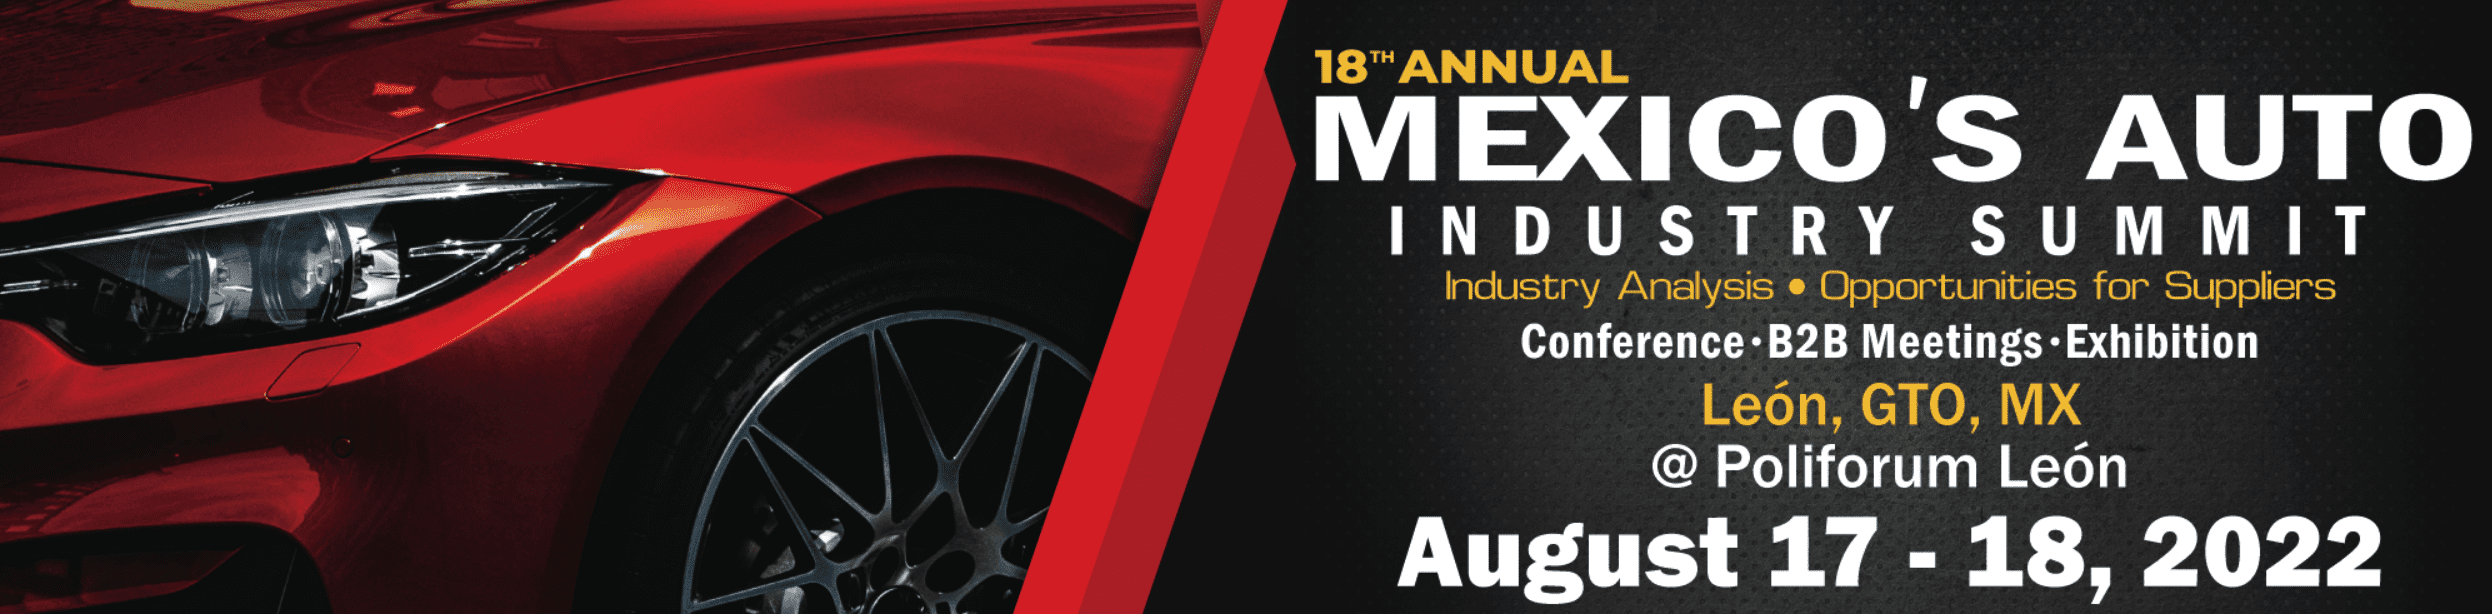 Mexico's Auto Industry Summit